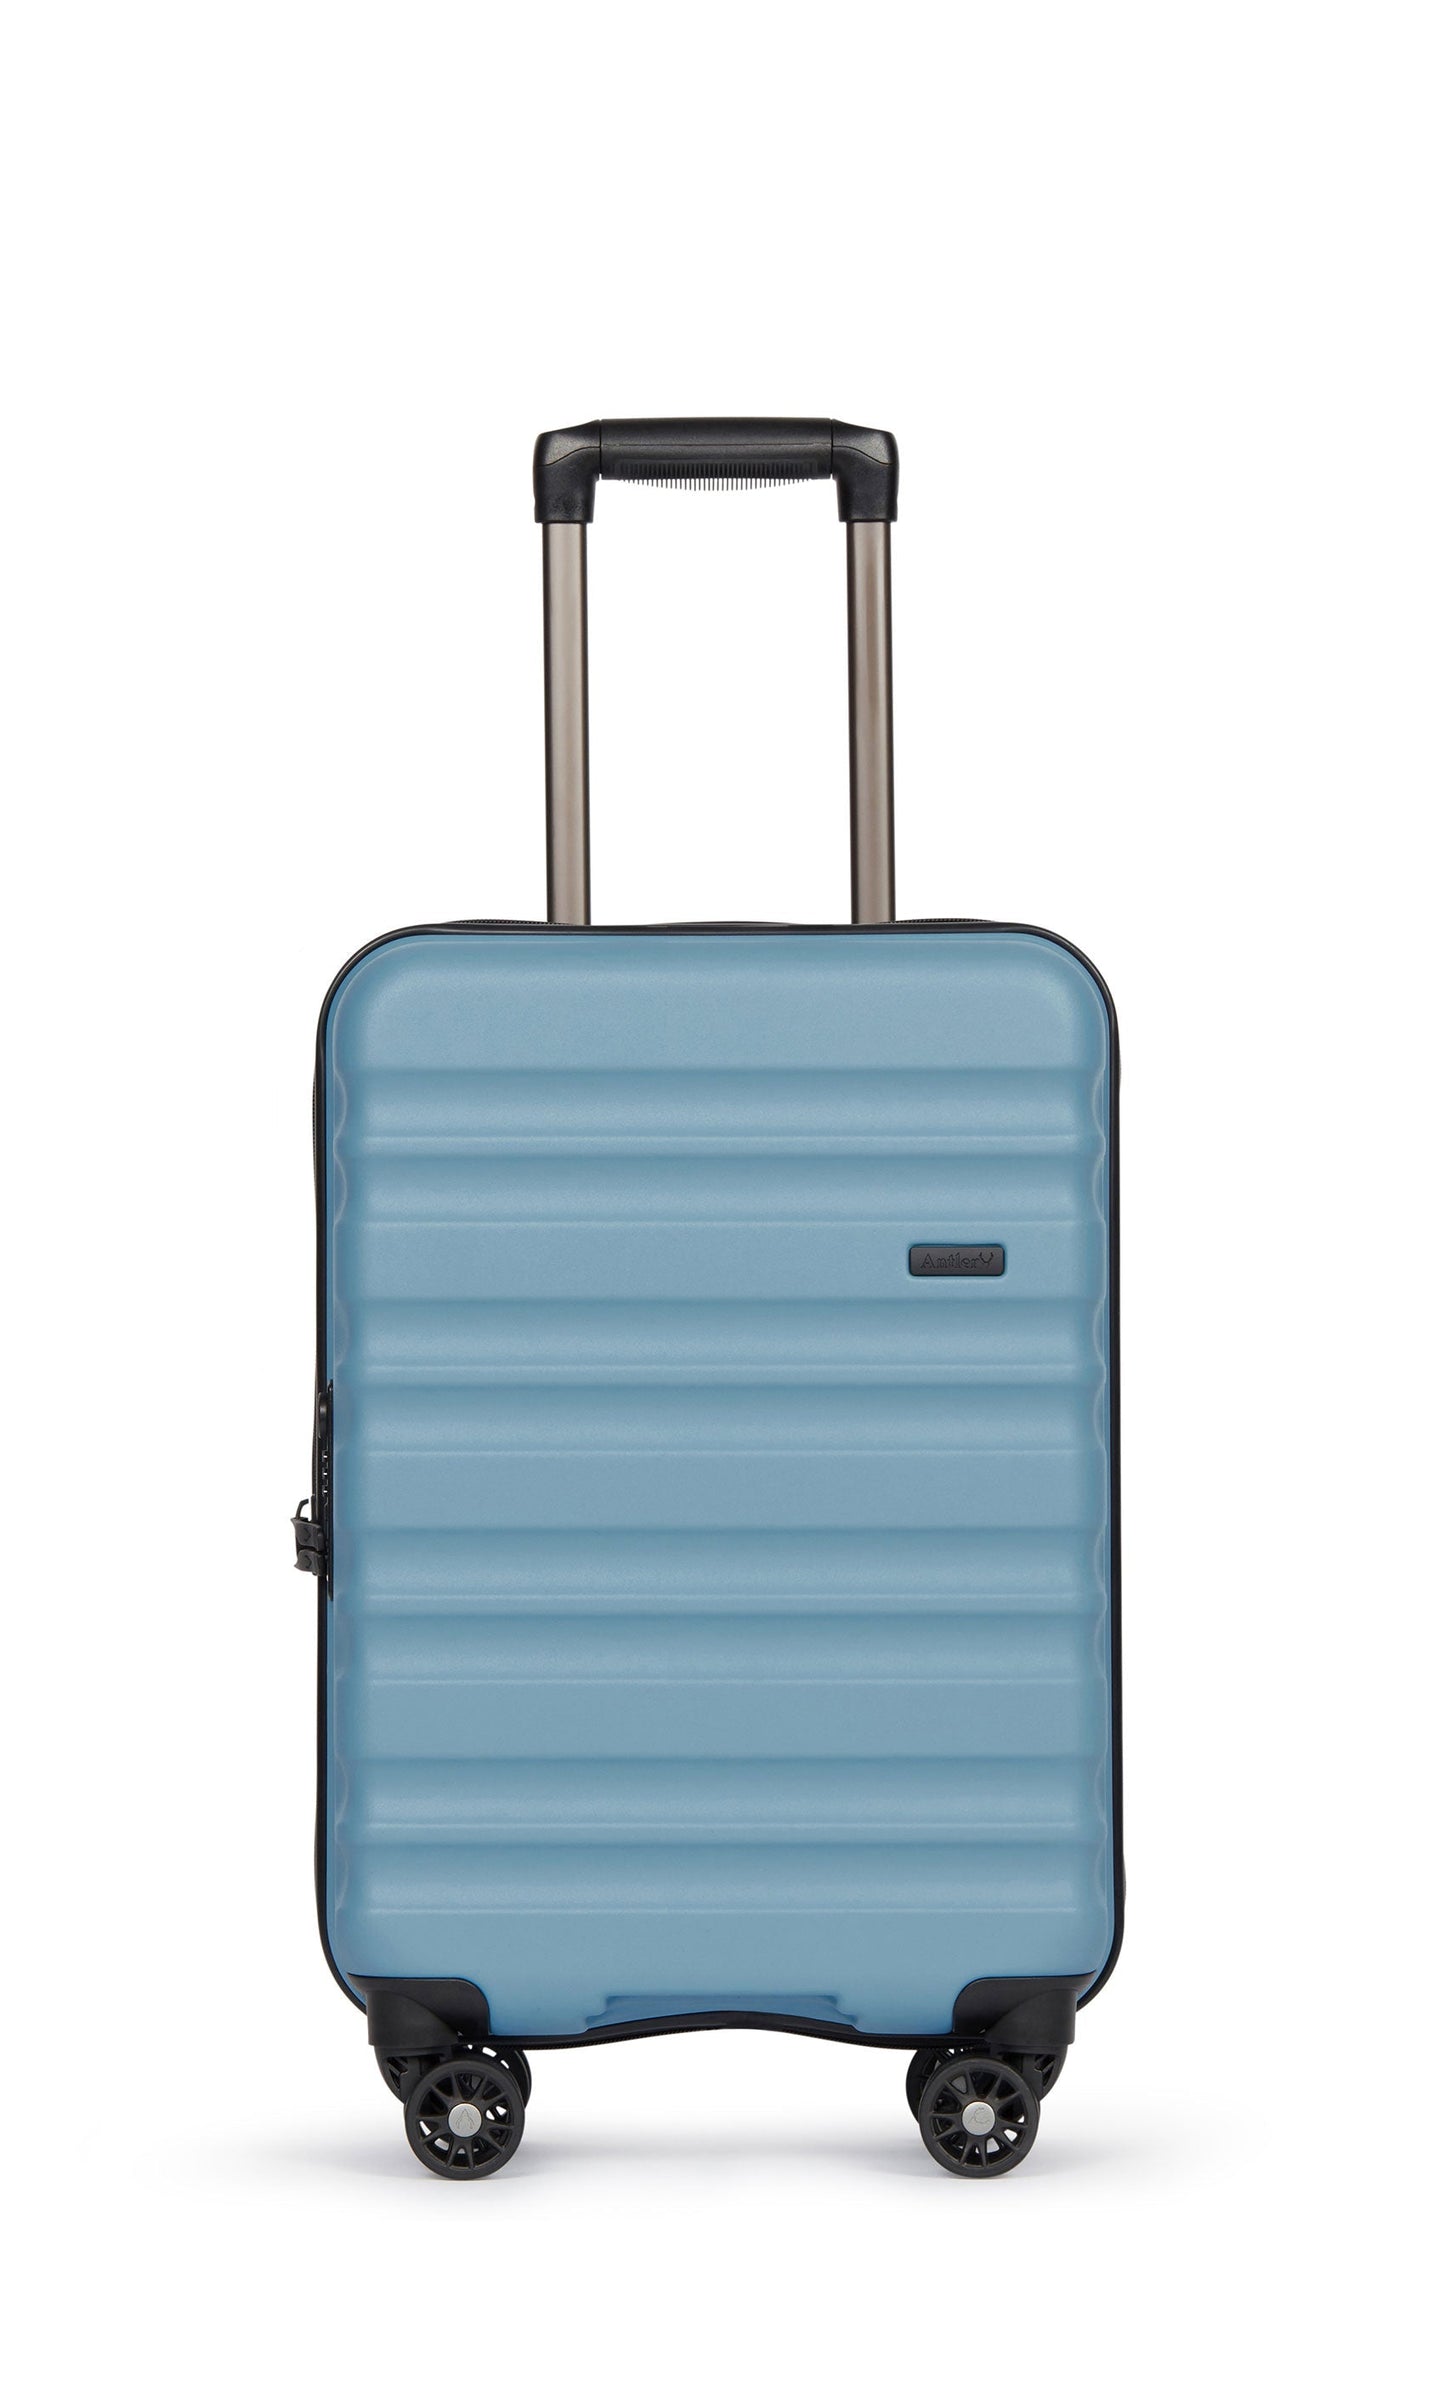 Clifton set in ocean - Antler Luggage Australia